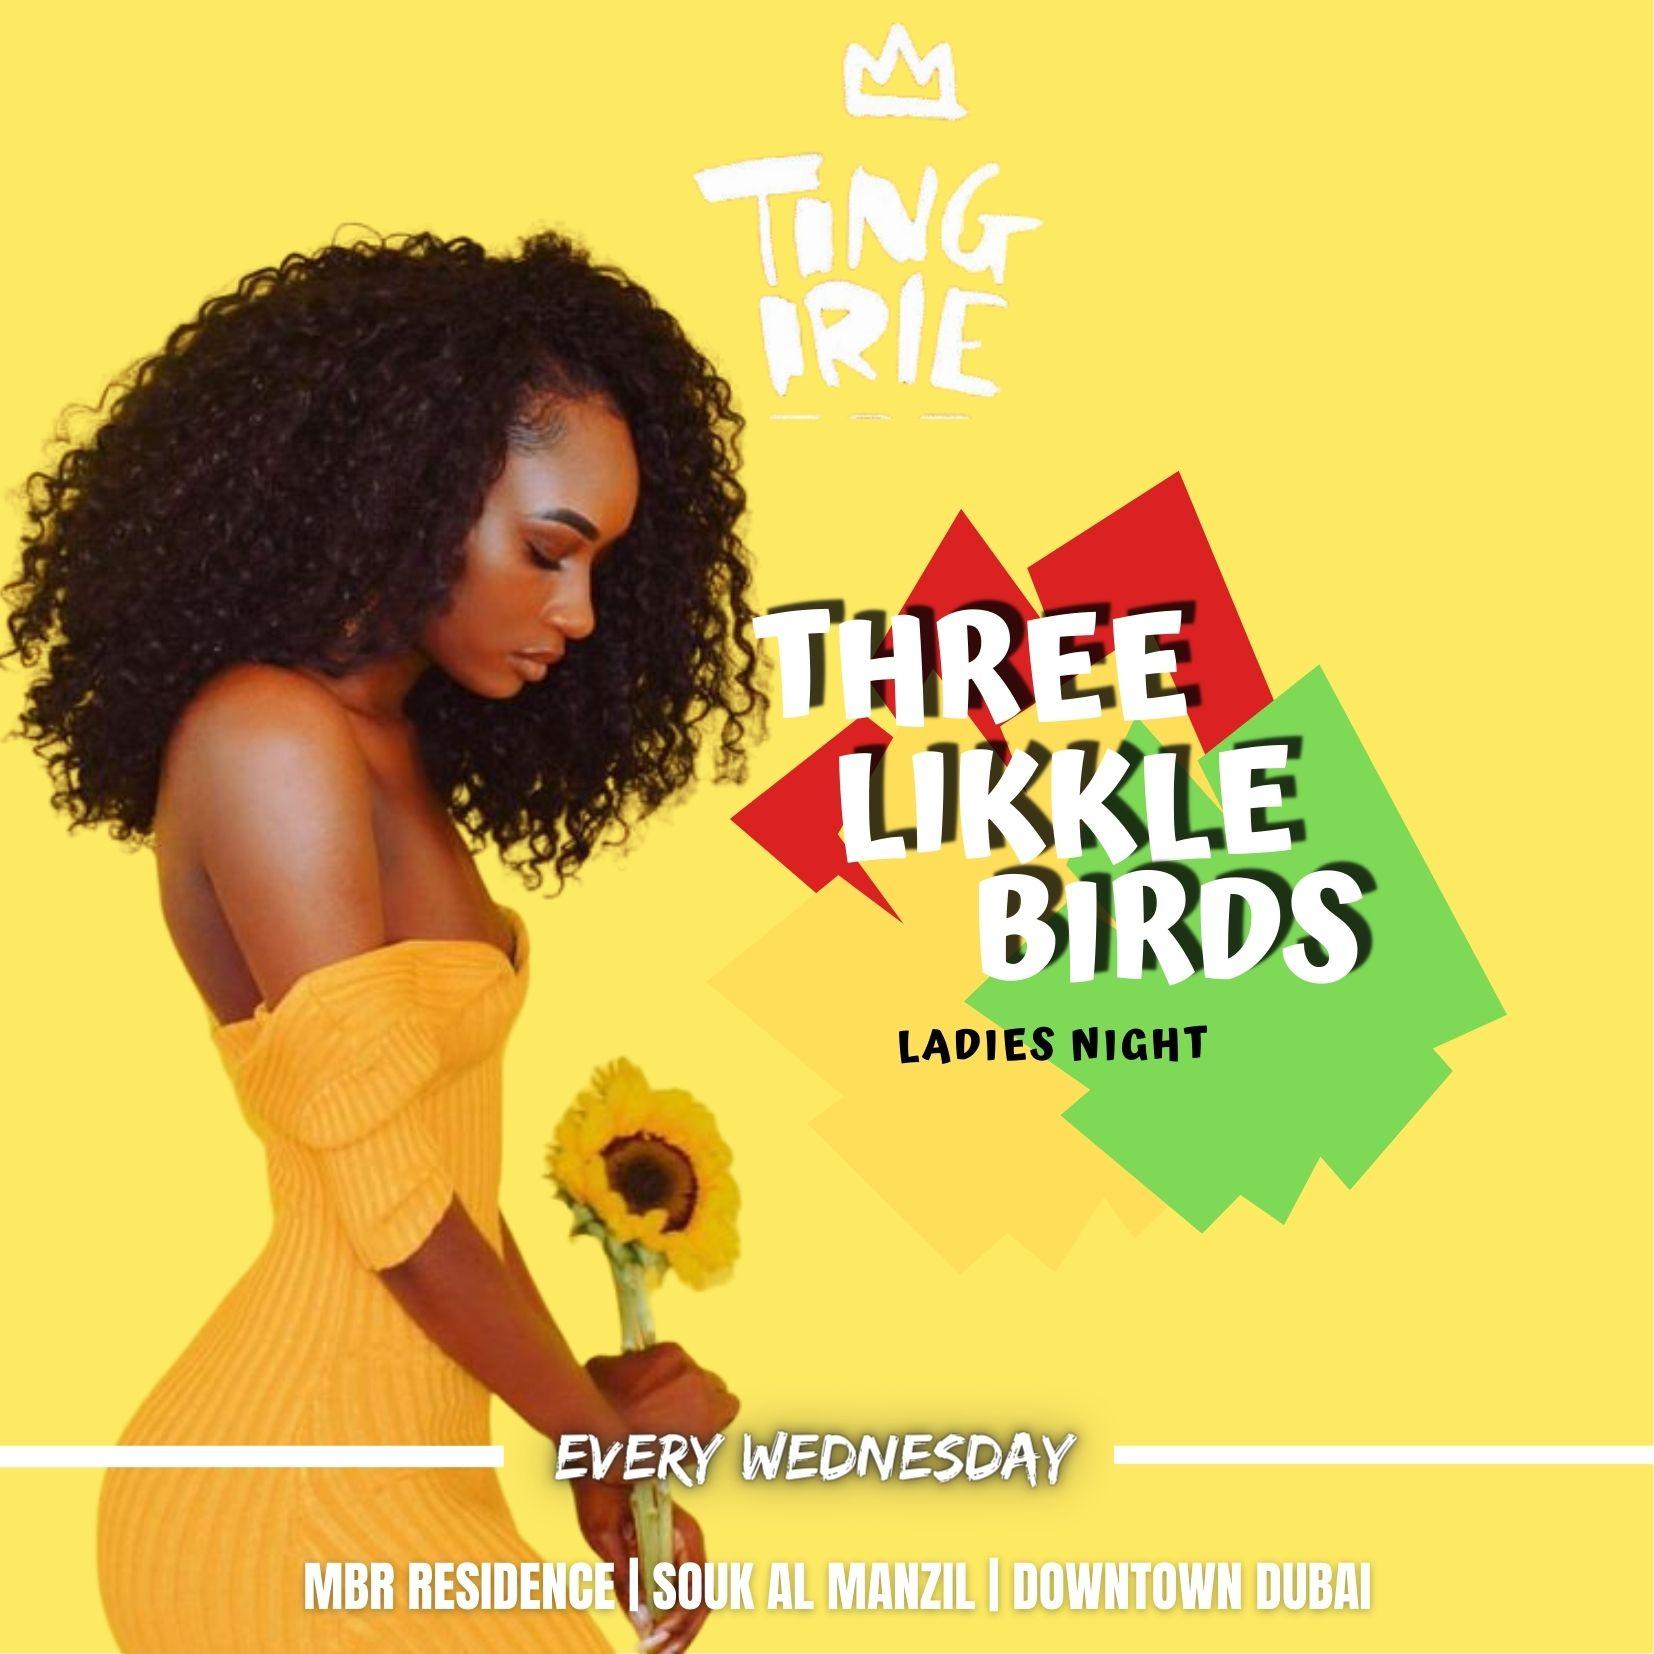 THREE LIKKLE BIRDS “LADIES NIGHT”  at Ting Irie